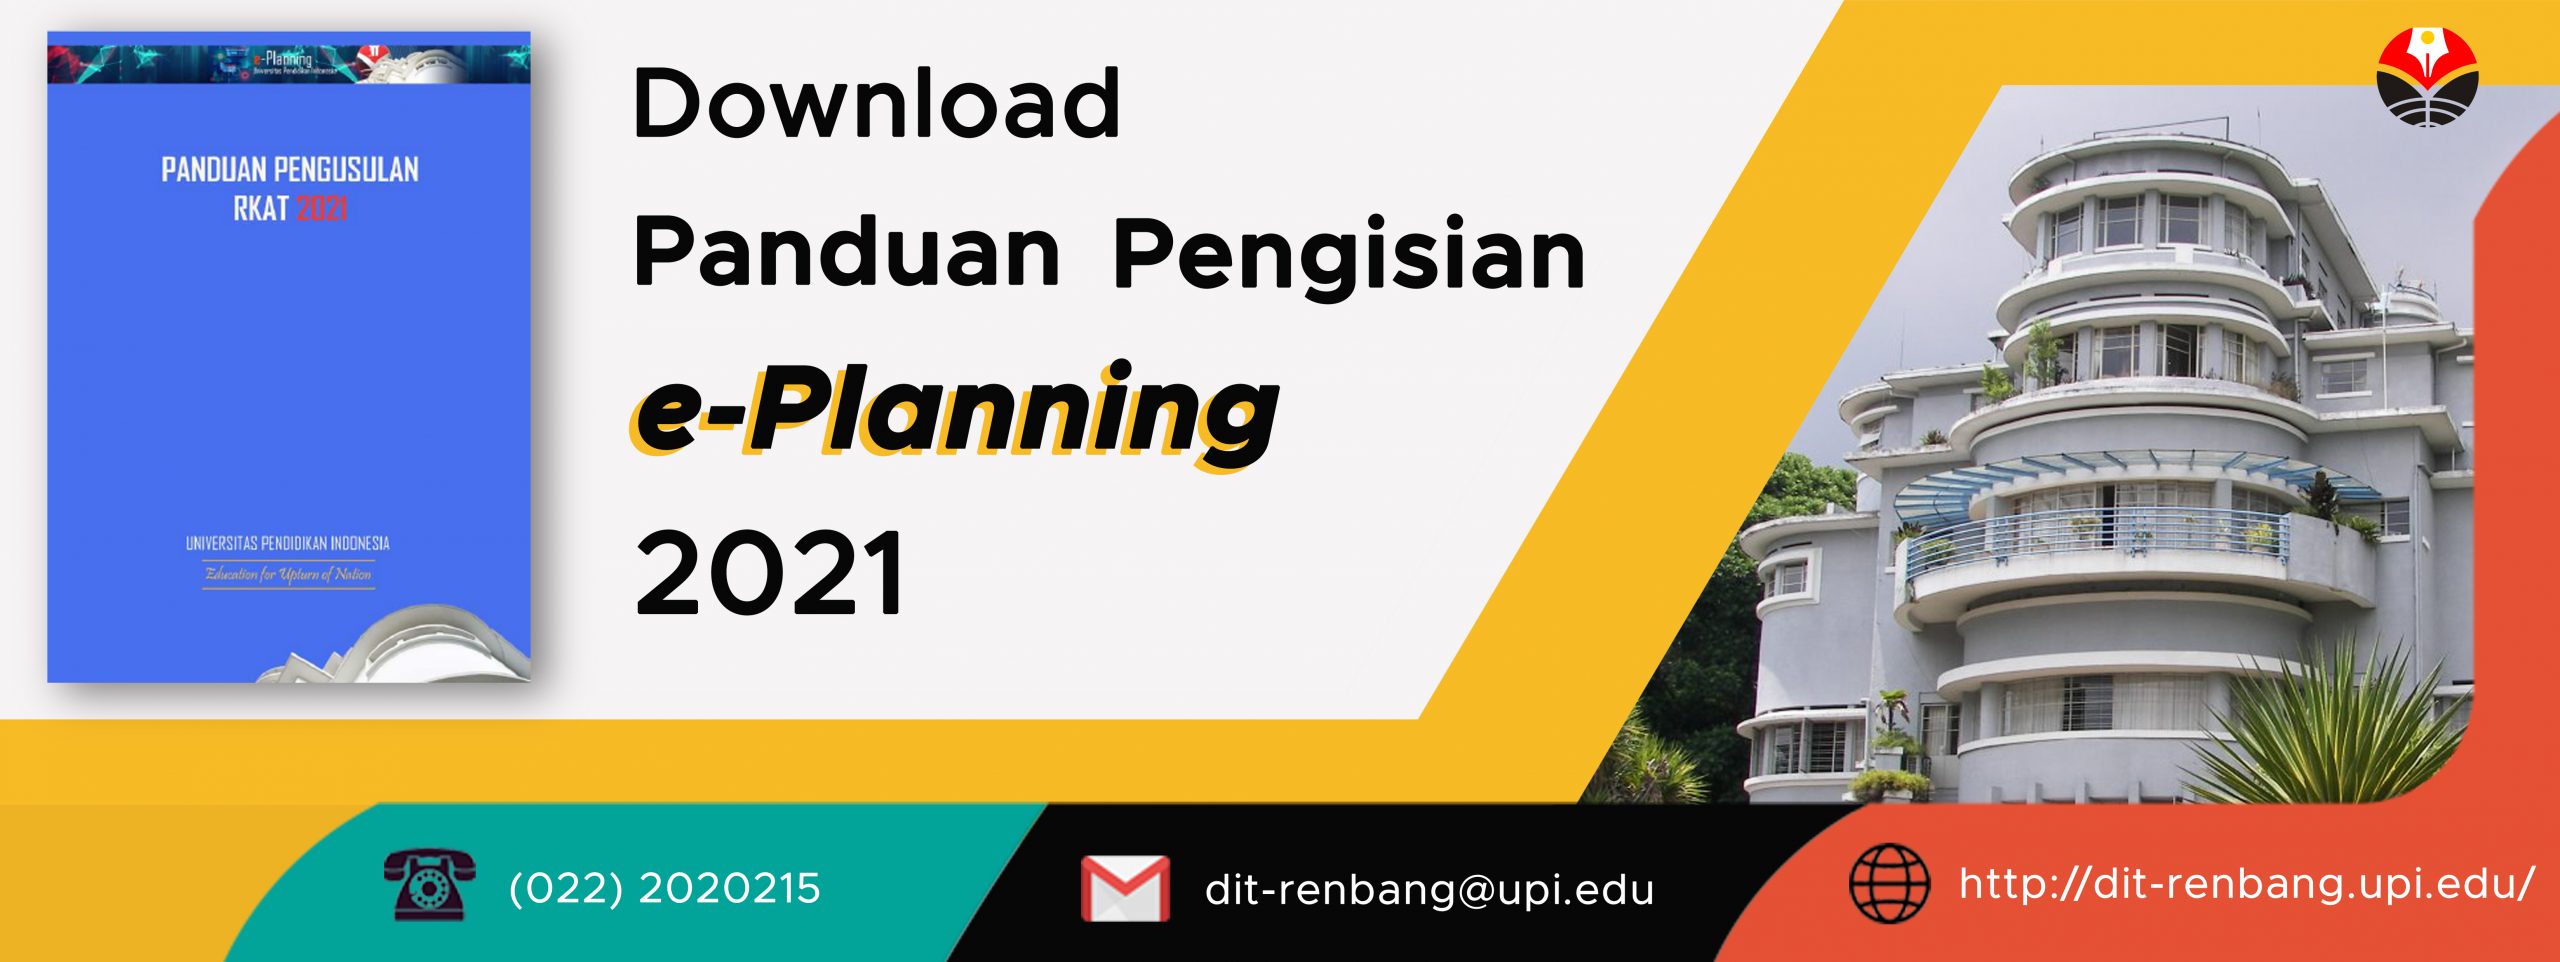 You are currently viewing Panduan Pengisian e-Planning (Pengusulan RKAT) 2021